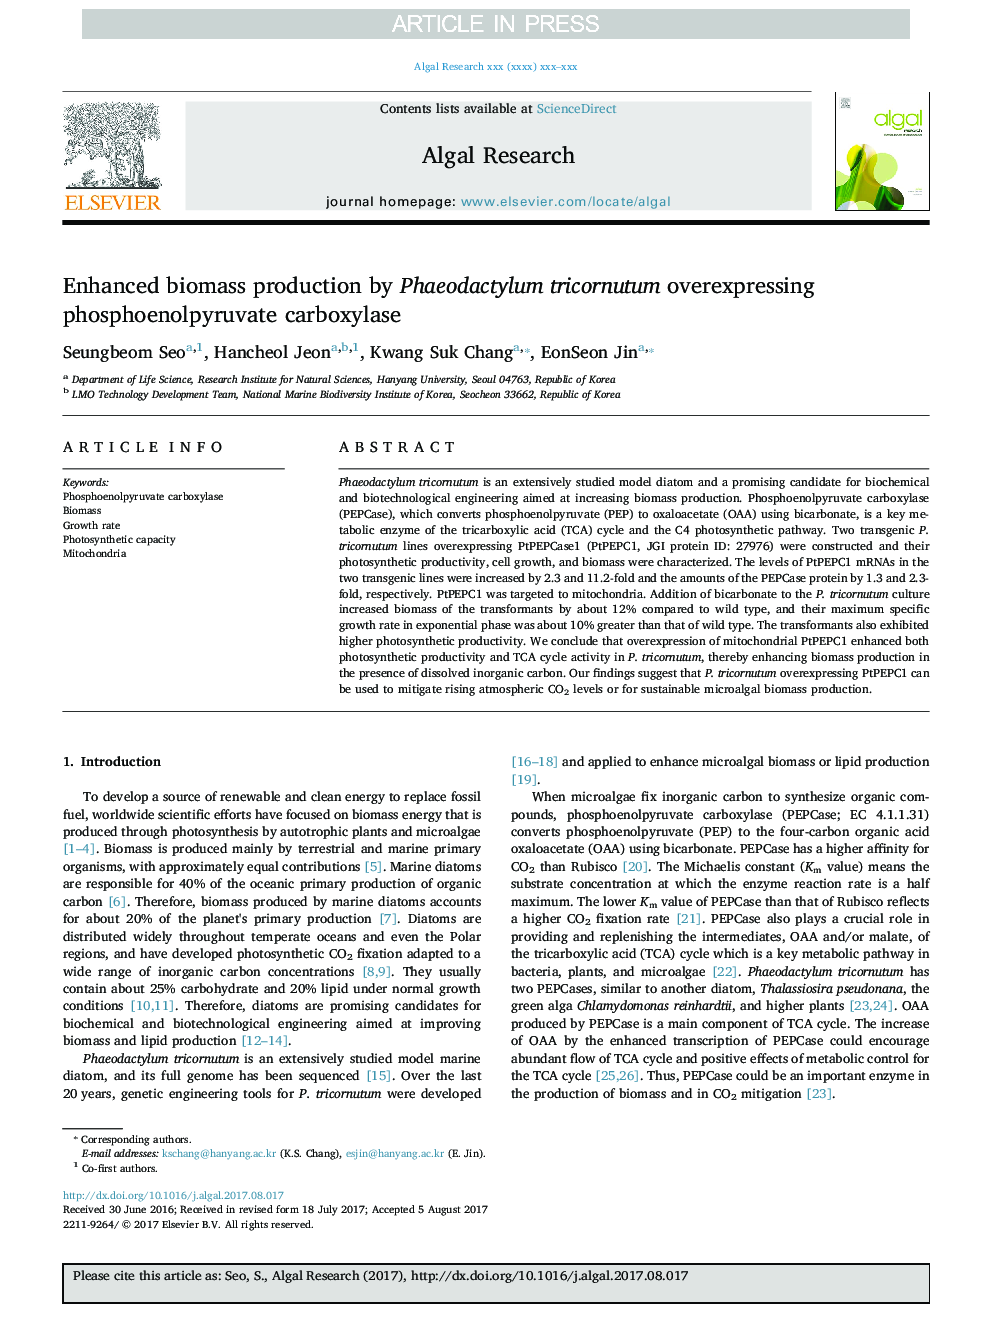 Enhanced biomass production by Phaeodactylum tricornutum overexpressing phosphoenolpyruvate carboxylase